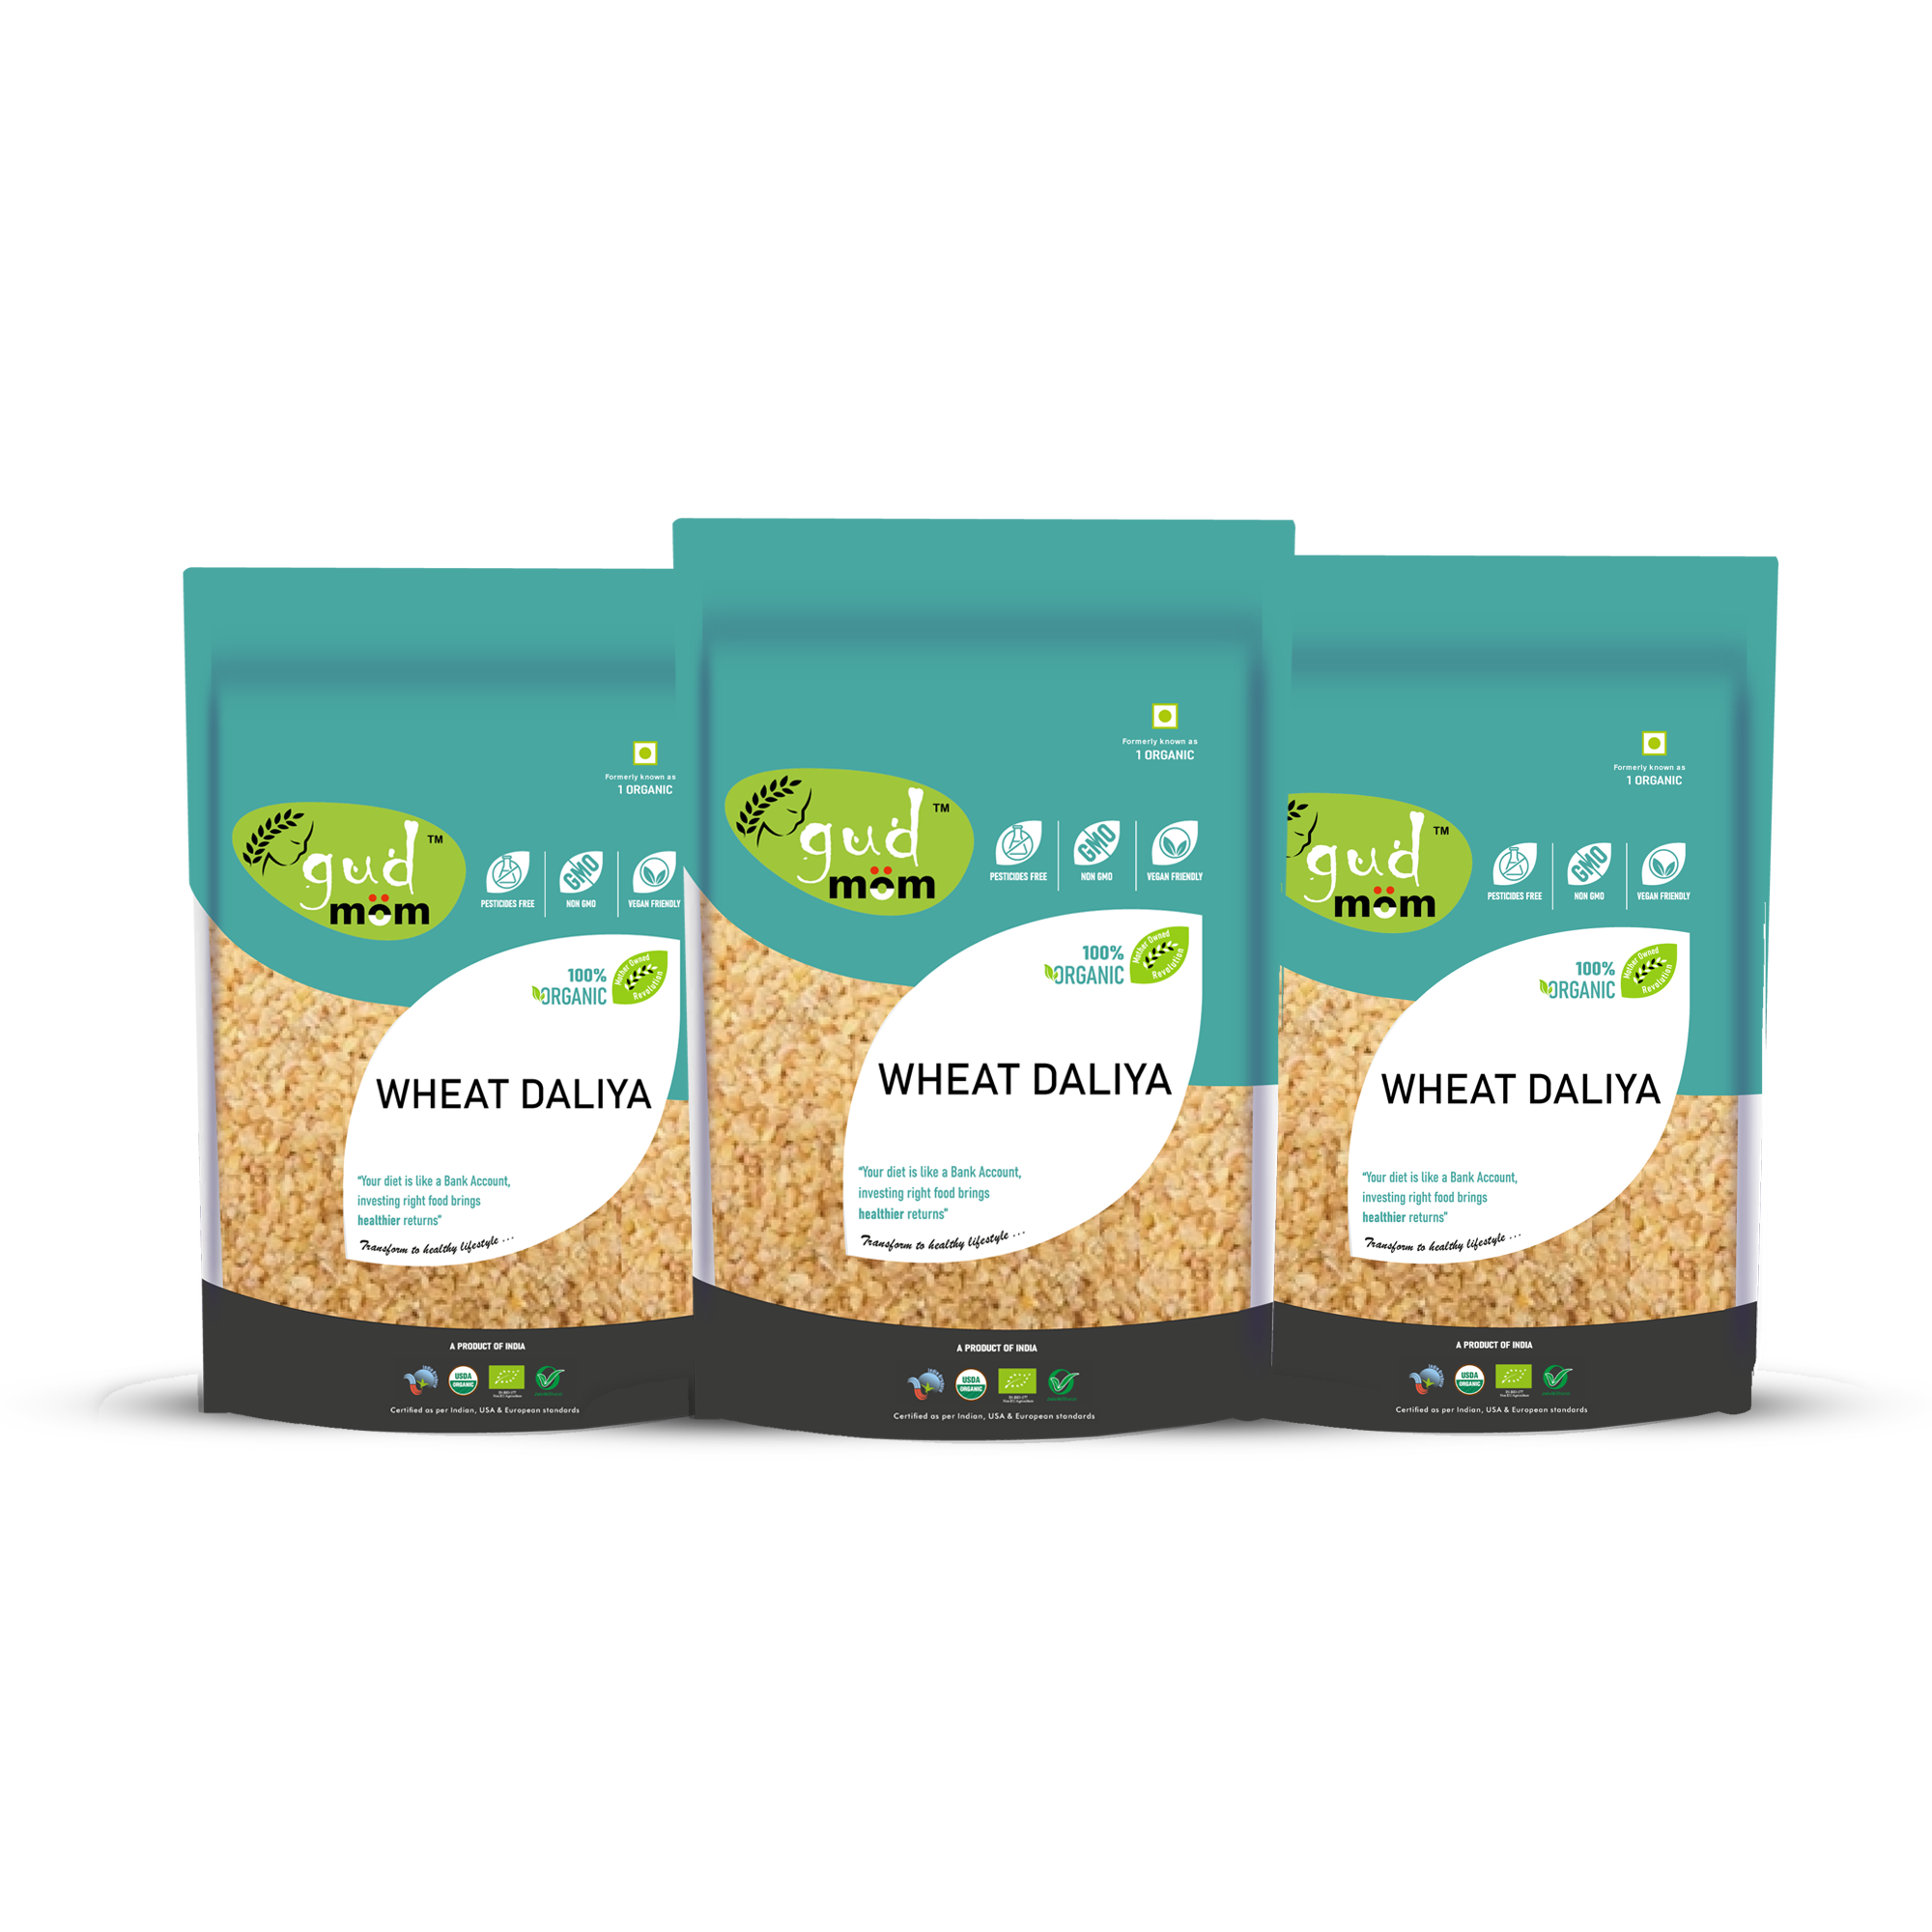 Product: Gudmom Organic Wheat Daliya 500 g ( Pack Of 3 )